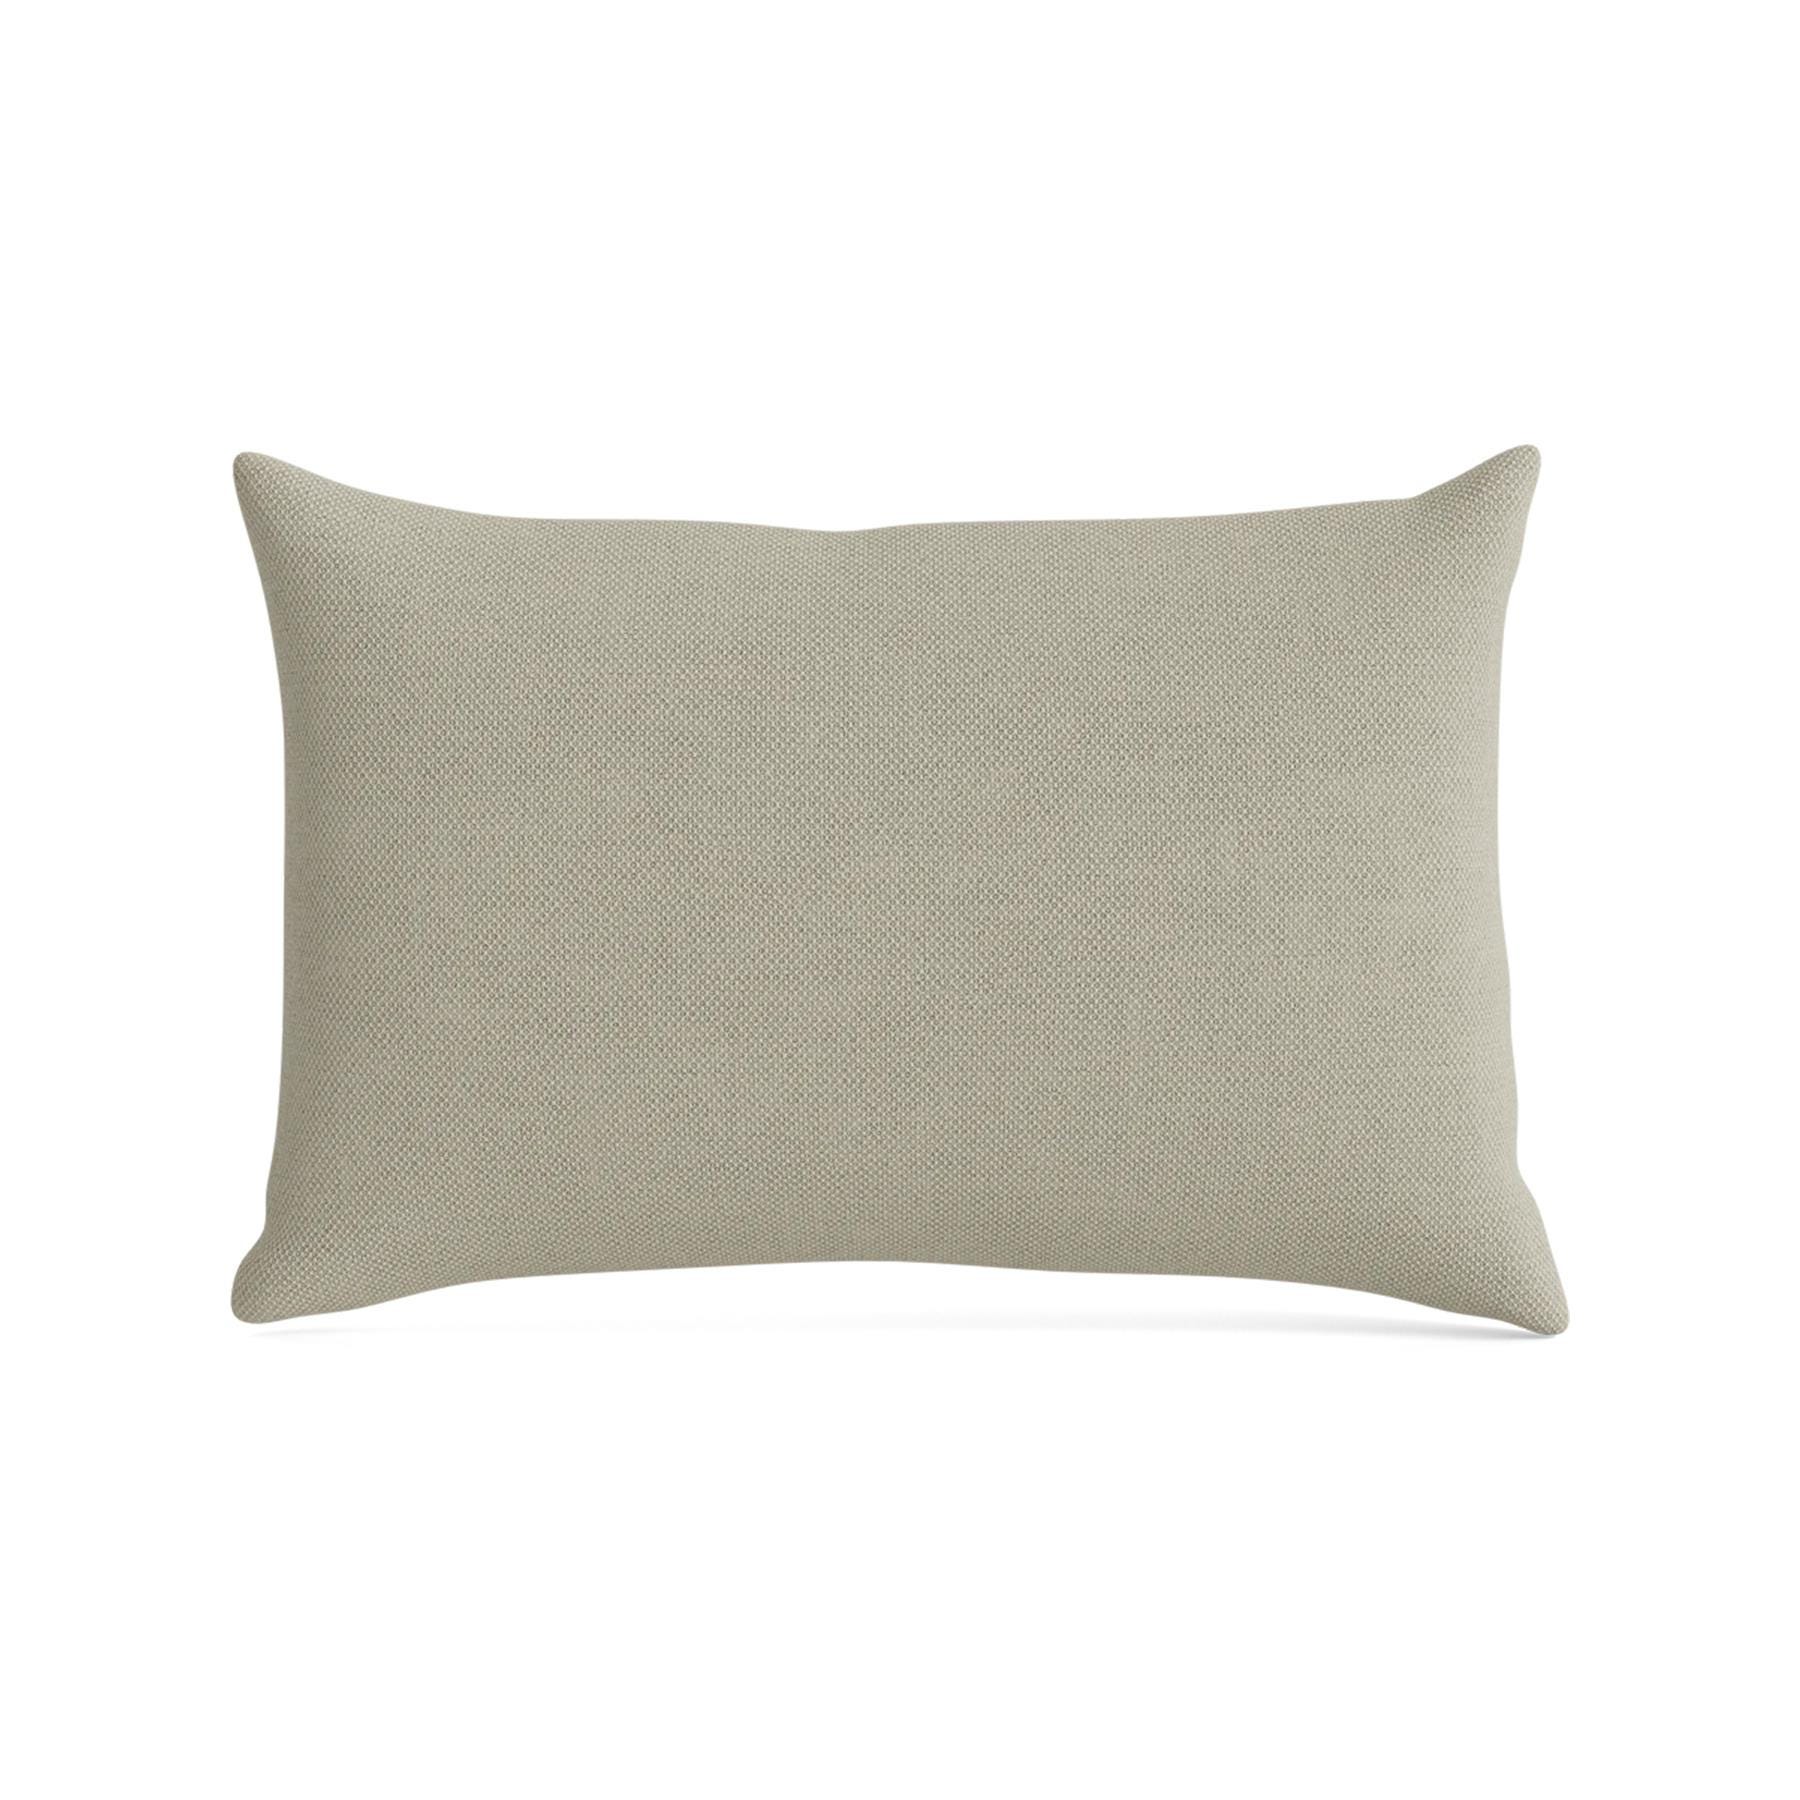 Make Nordic Pillow 40cmx60cm Fiord 322 Down And Fibers Brown